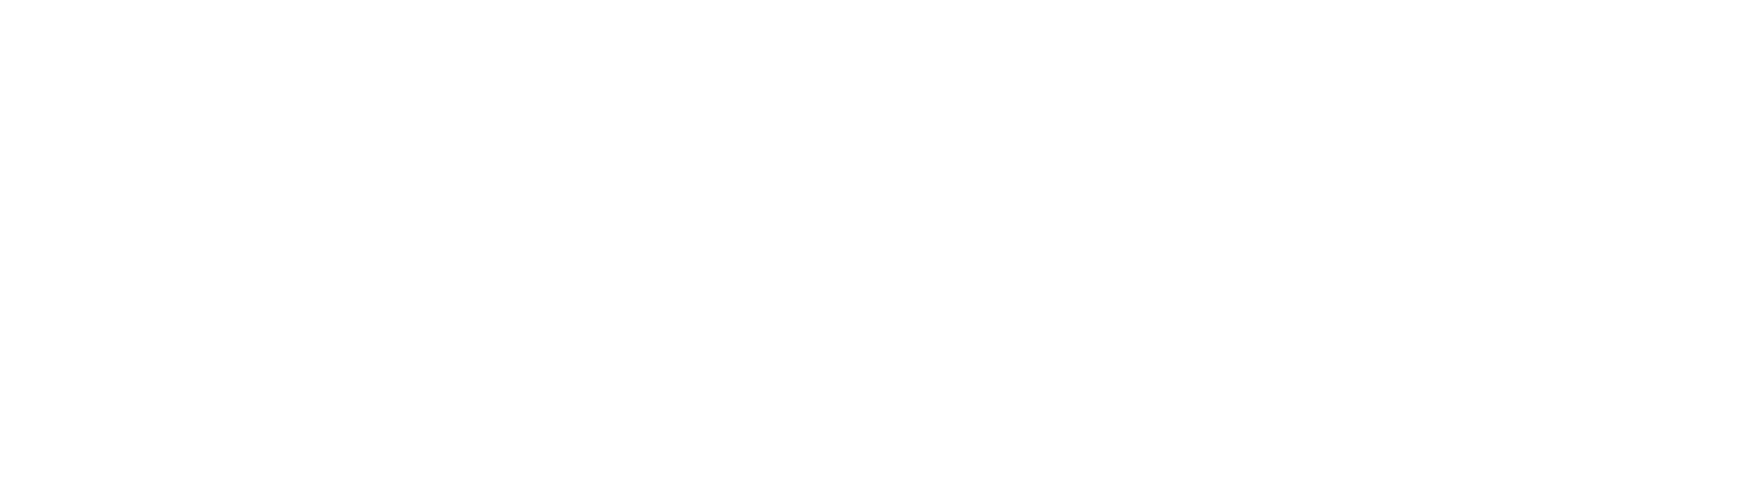 City of Chowchilla